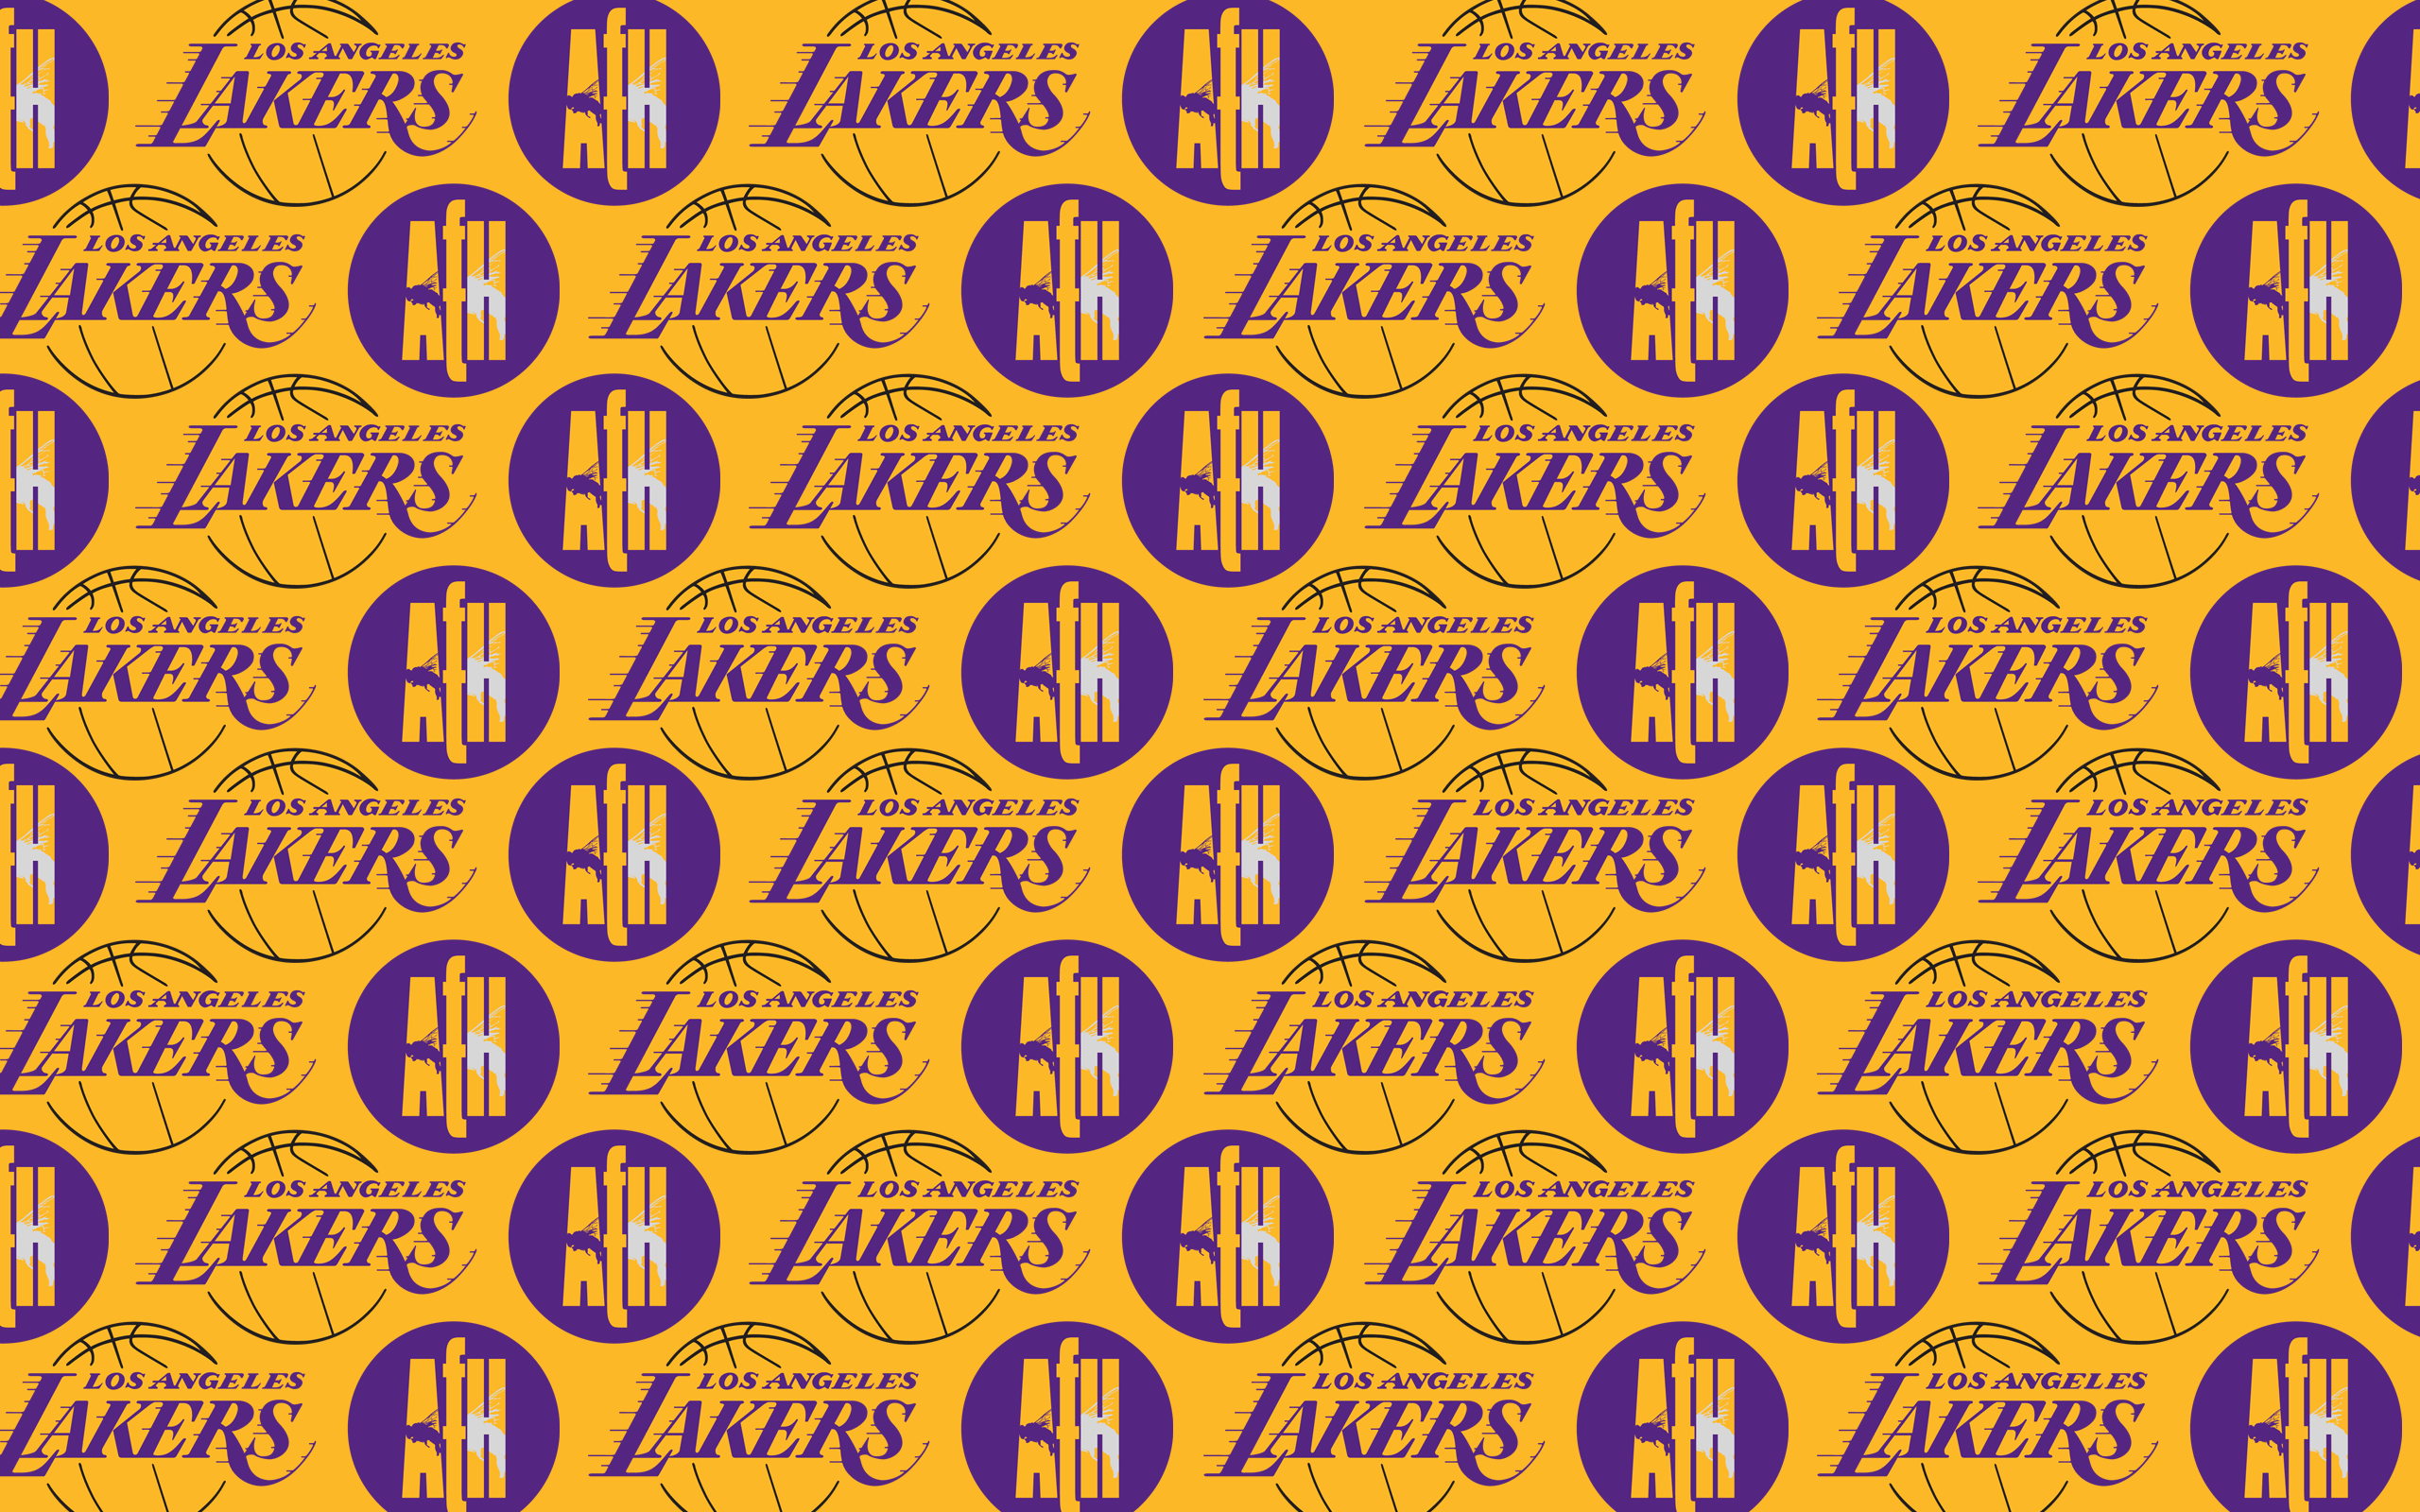 Los angeles 52 текст. Lakers фон. Лос-Анджелес Лейкерс логотип. Los Angeles Lakers обои. Lakers обои на рабочий стол.